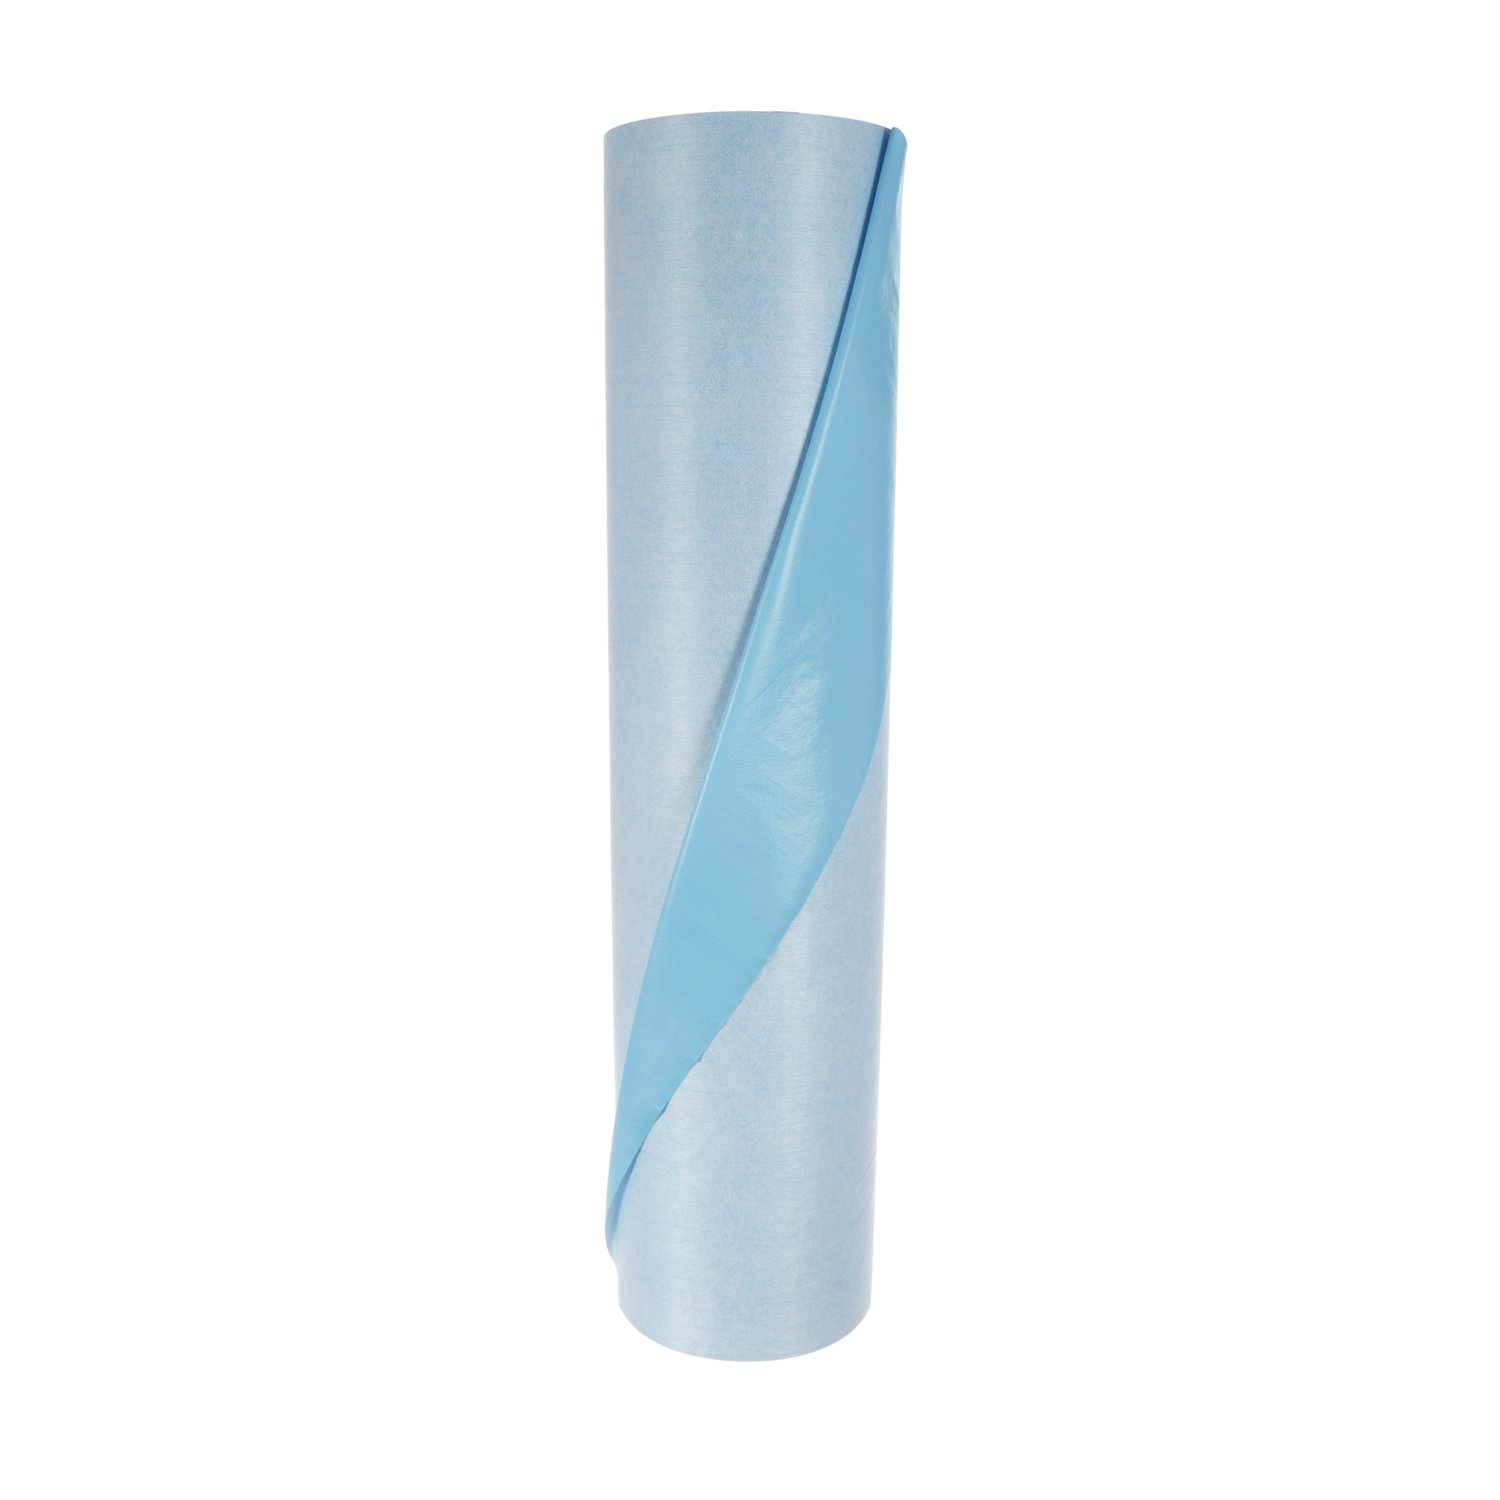 7100169352 - 3M Self-Stick Liquid Protection Fabric, 36880, Blue, 36 in x 300 ft, 1
roll per case